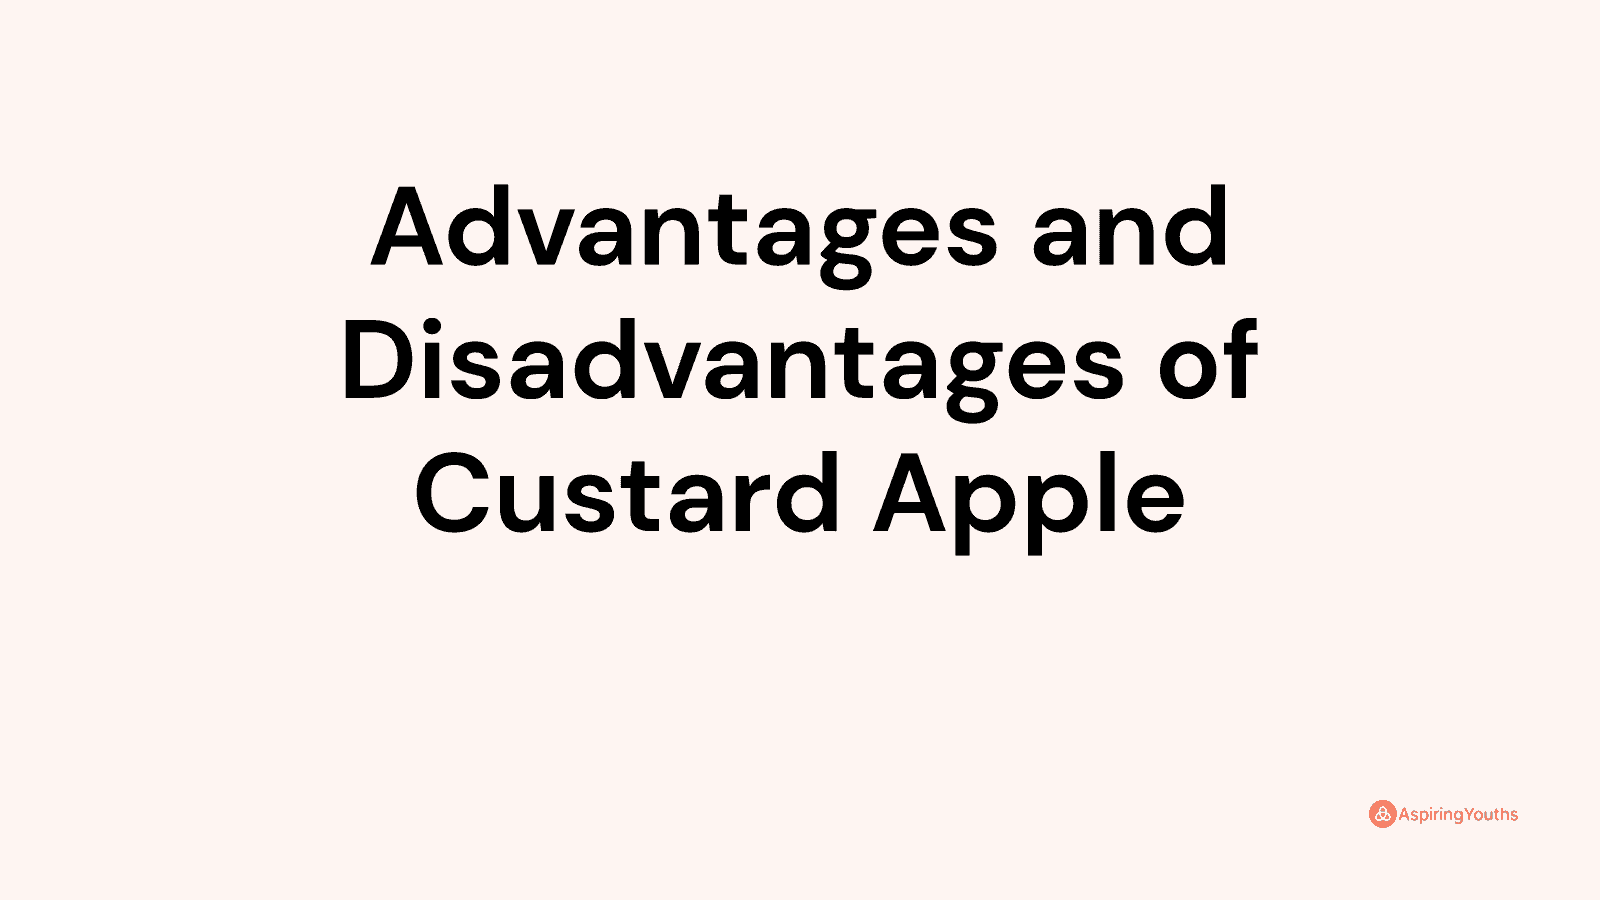 Advantages and disadvantages of Custard Apple